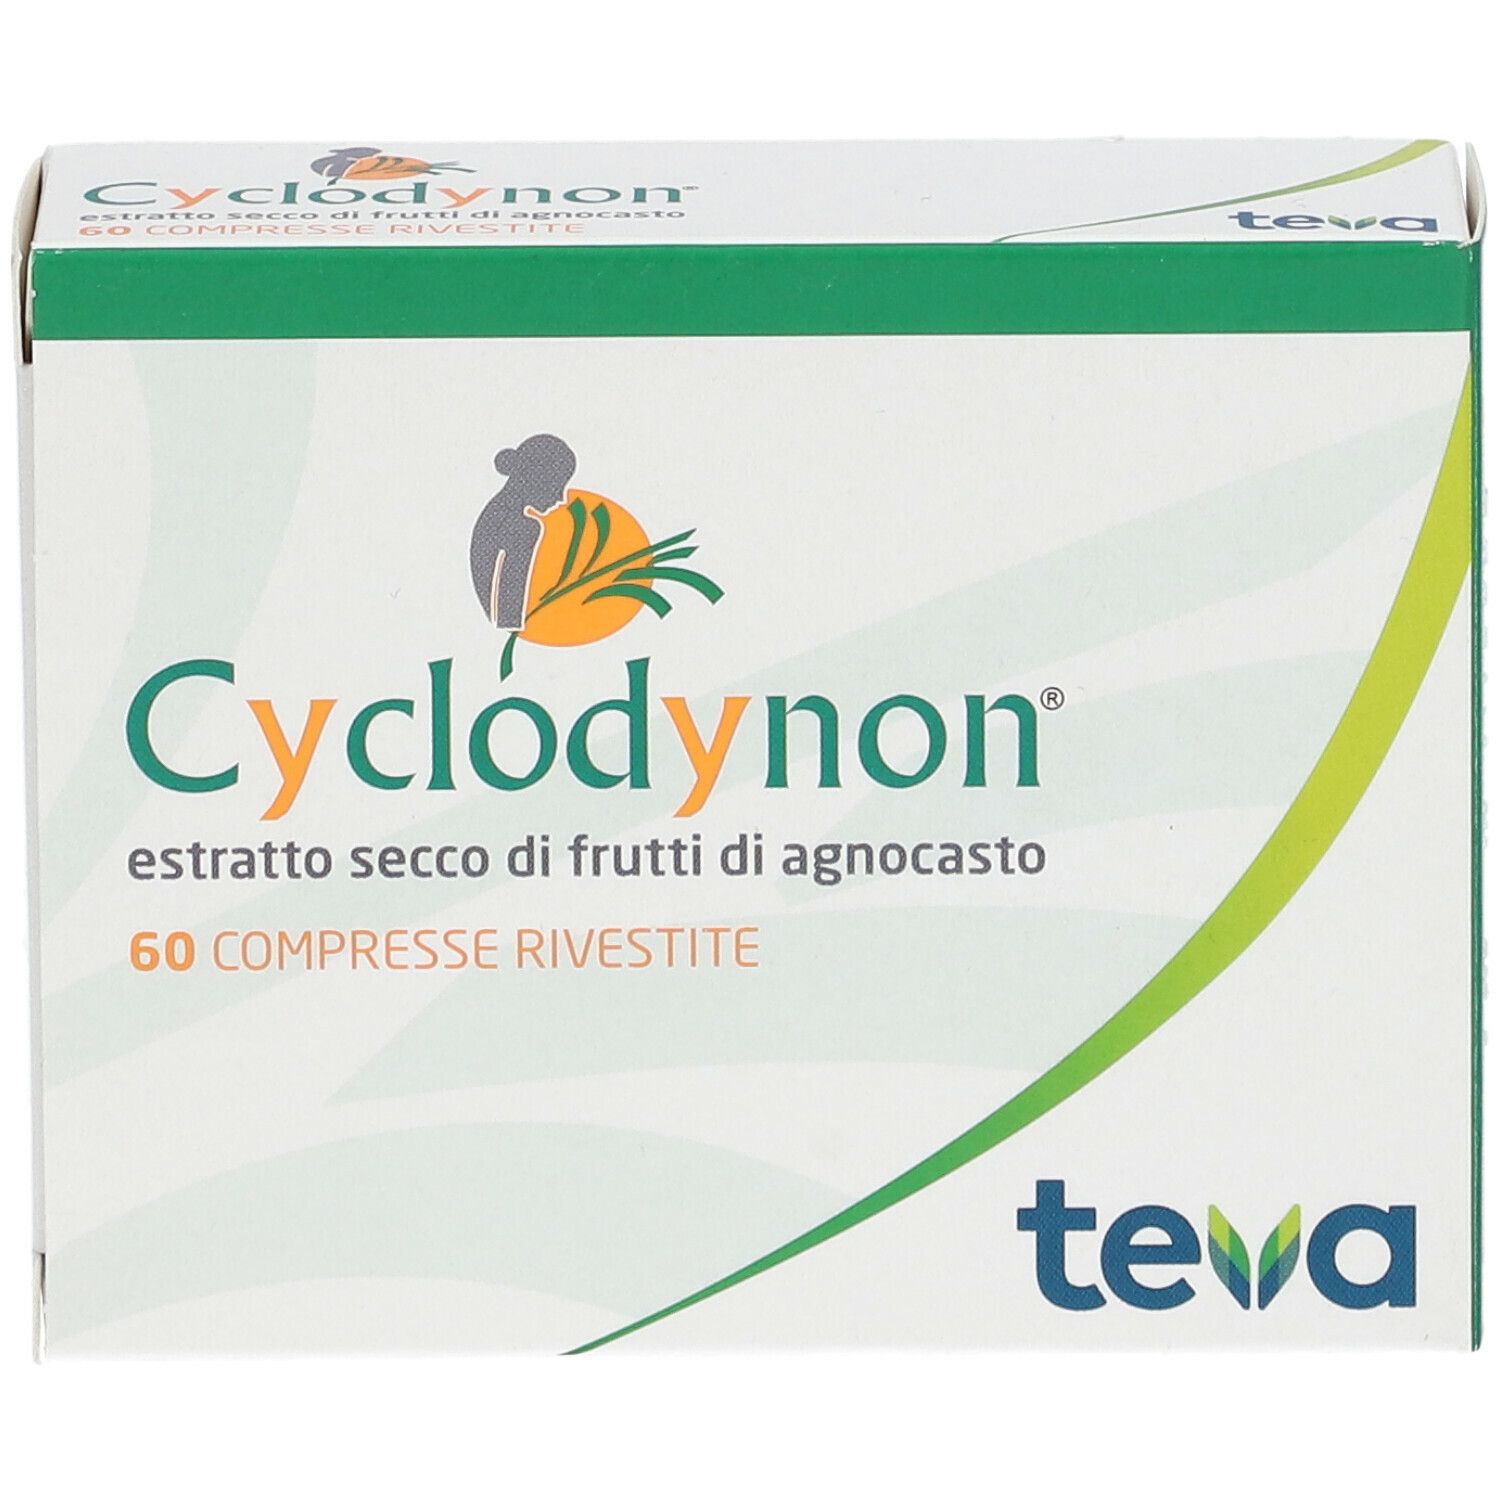 Cyclodynon®